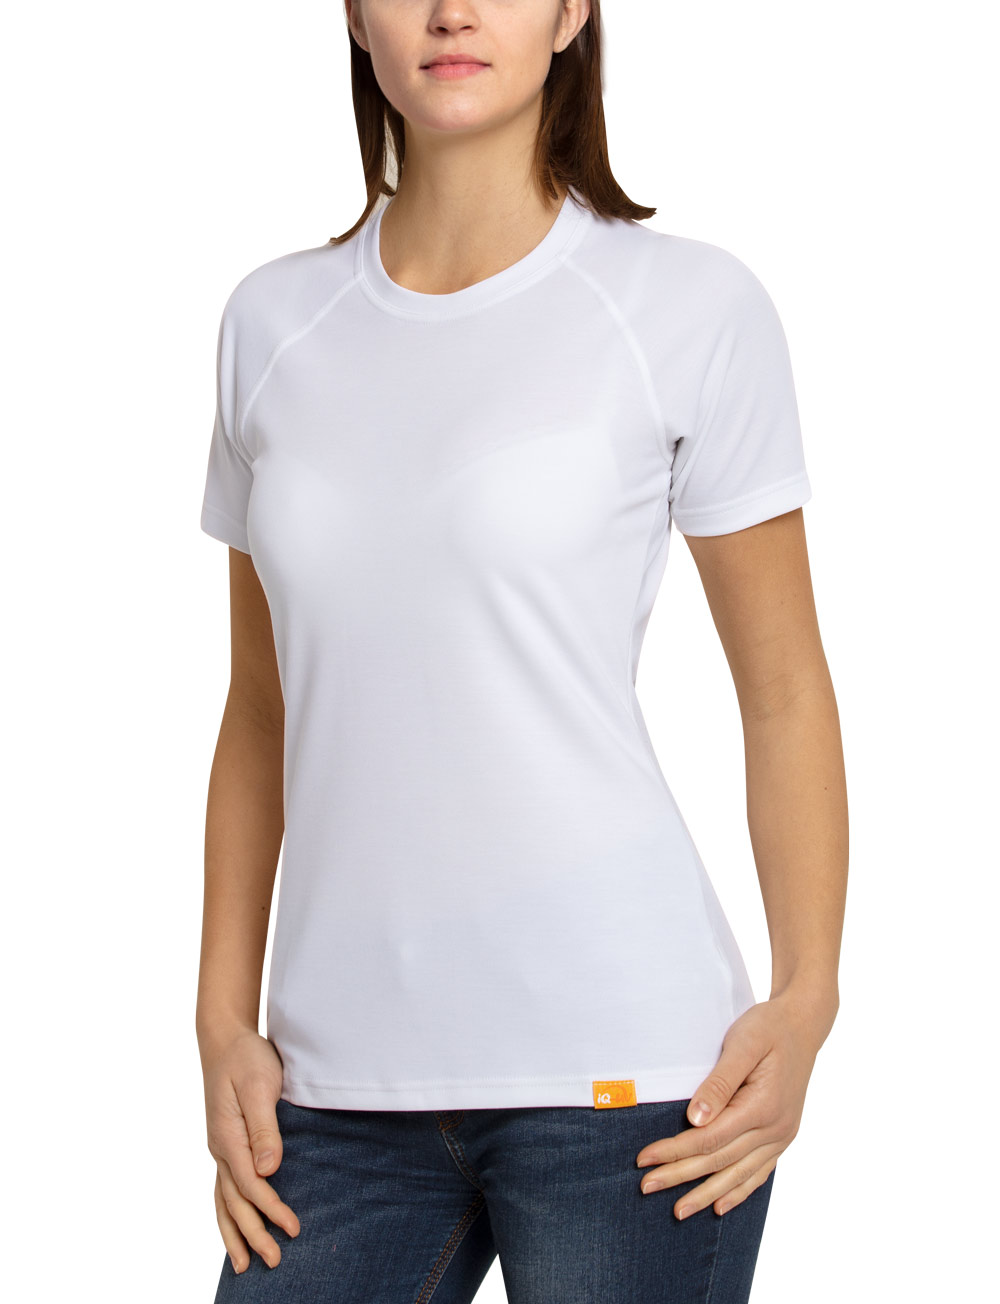 IQ UV 50+ T-Shirt Damen weiß